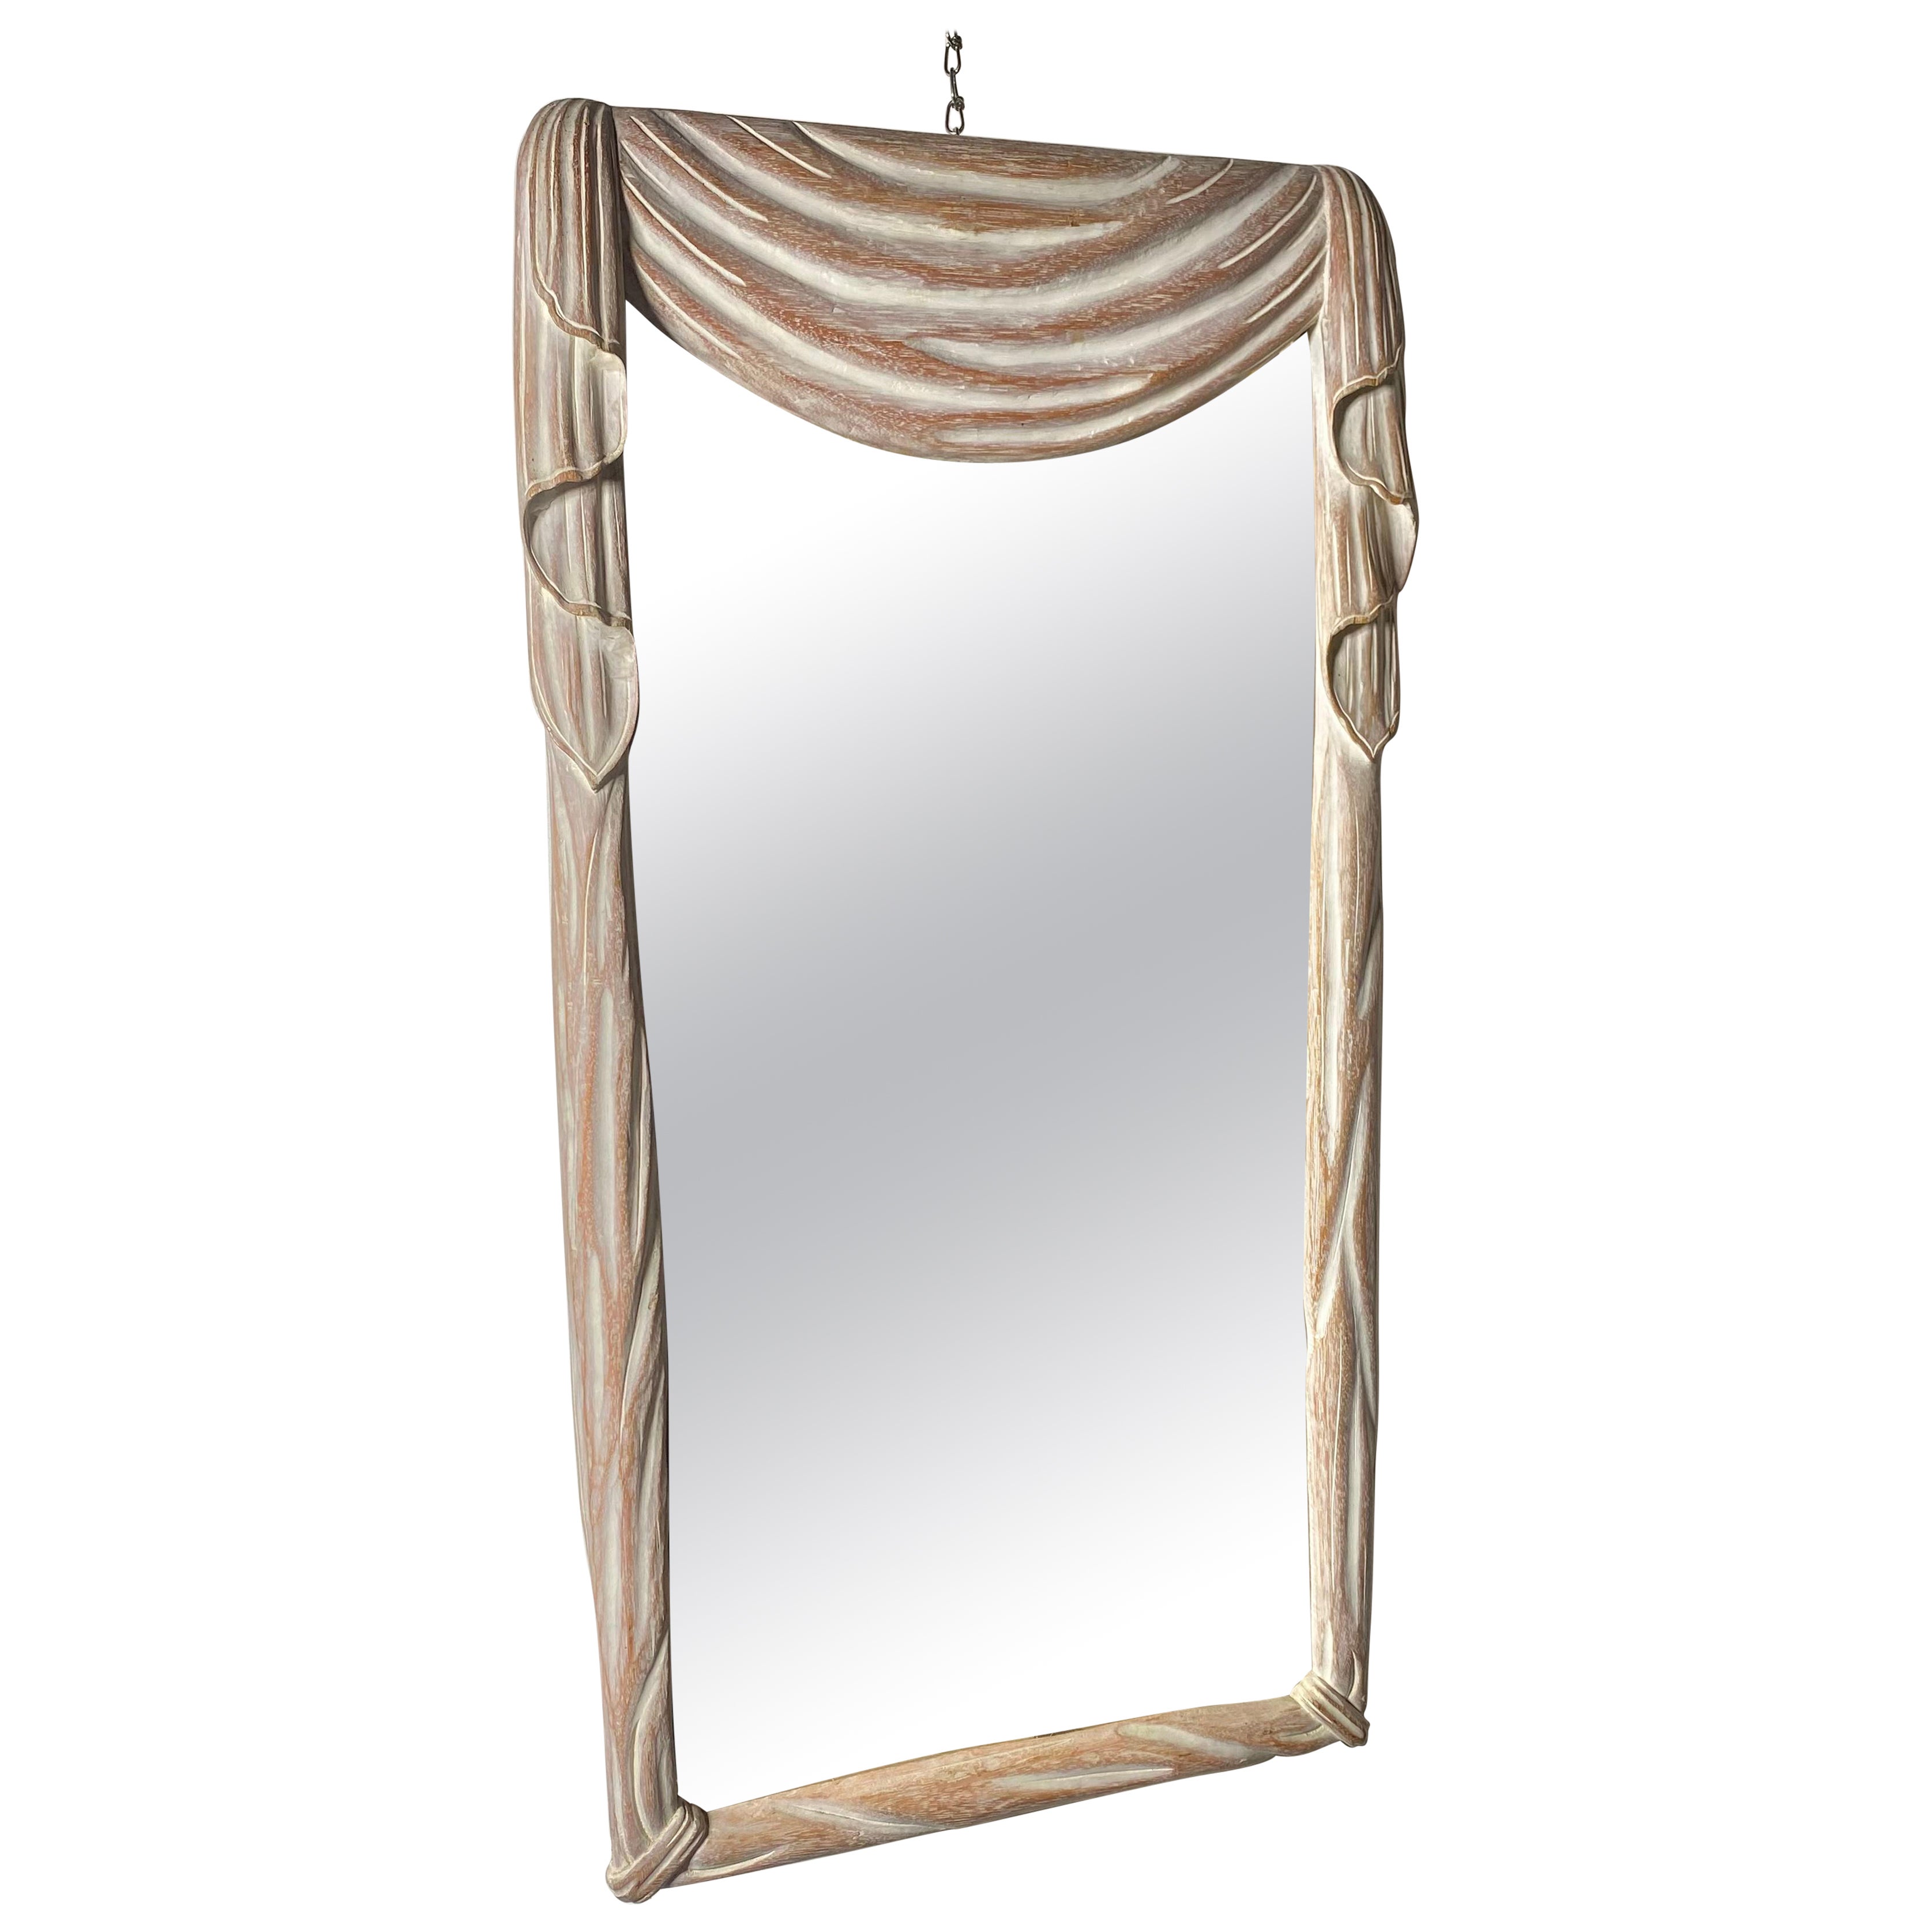 Modernist Regency Cerused Wood "Drape" mirror att to Osvaldo Borsani